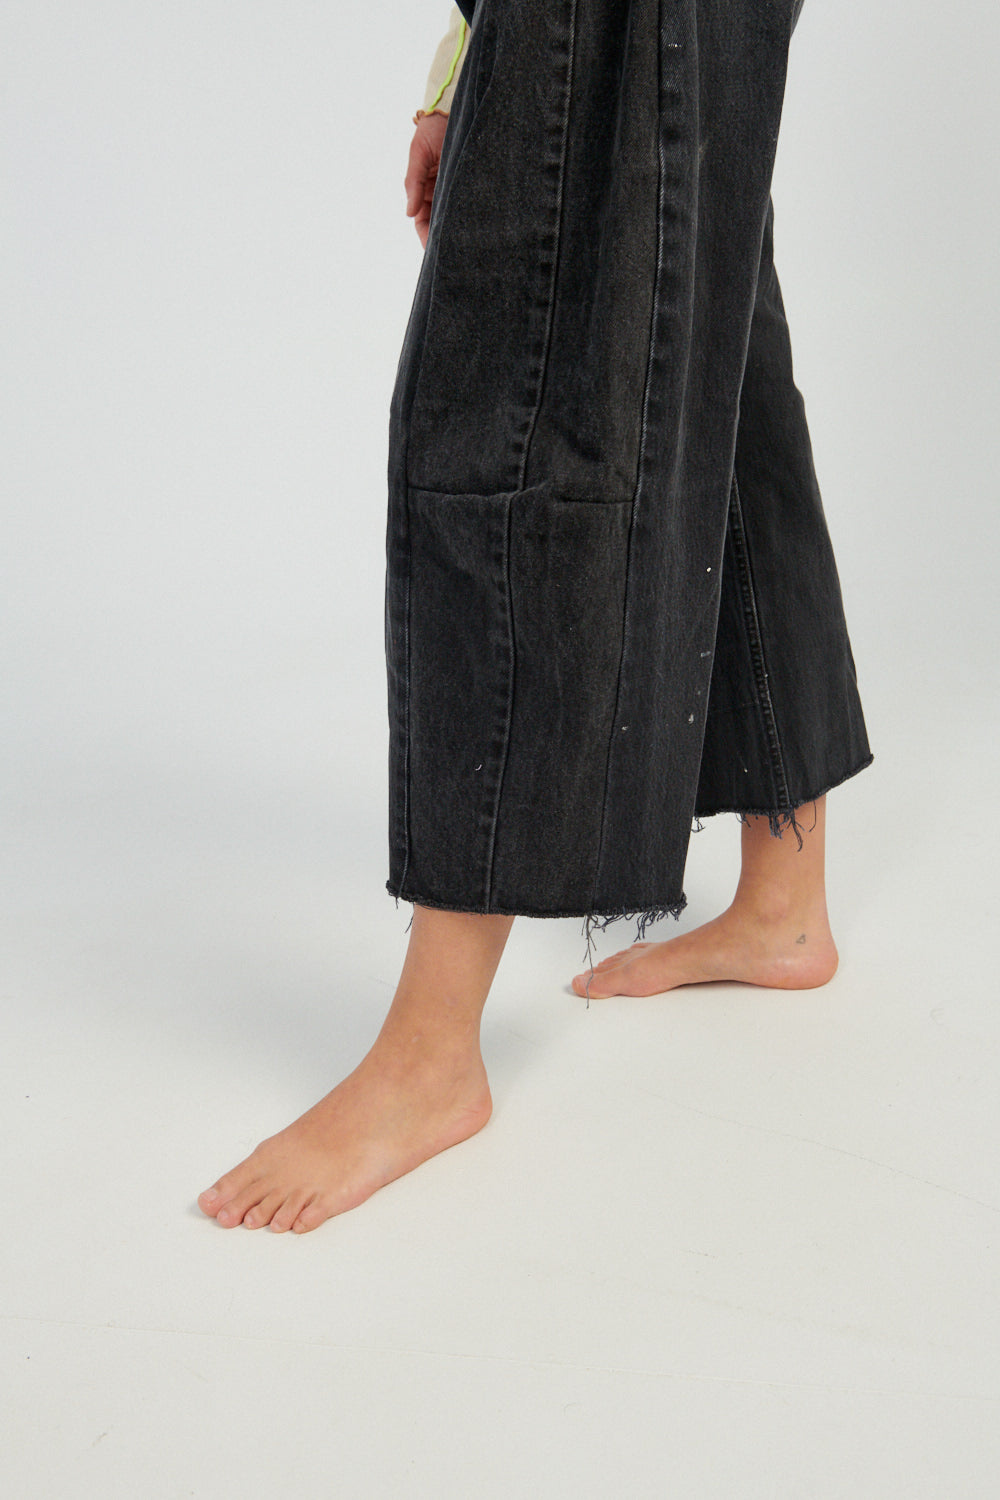 B Sides Lasso Jean Rework vintage black-B Sides Levis 501 vintage jeans-B Sides black jeans-Idun-St. Paul